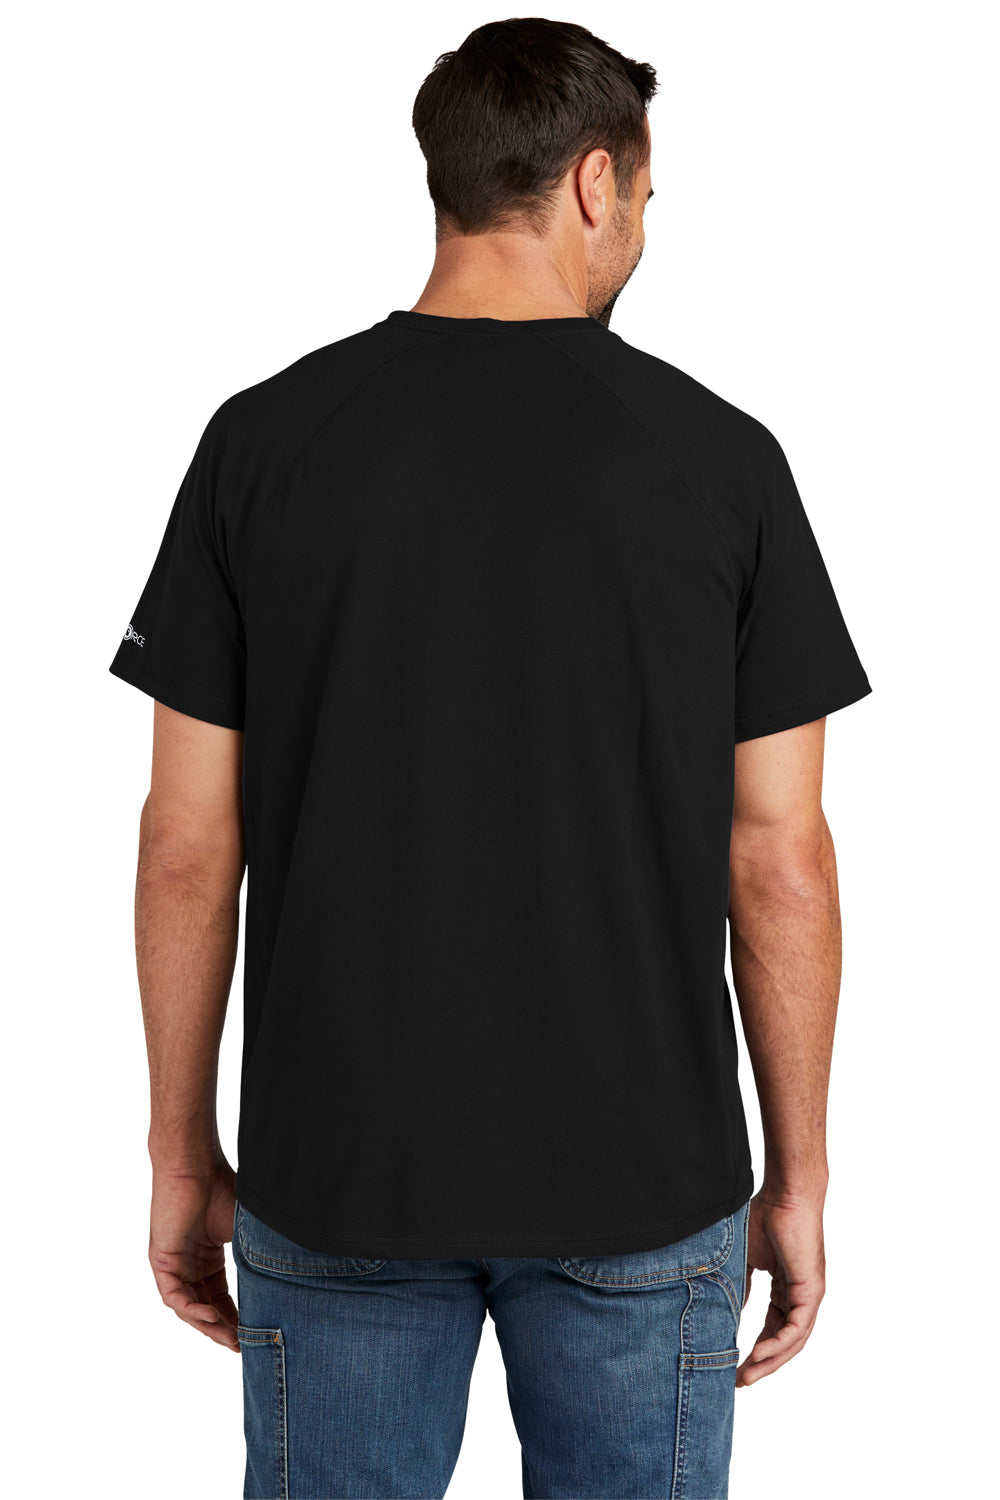 Carhartt CT104616 Mens Force Moisture Wicking Short Sleeve Crewneck T-Shirt w/ Pocket Black Model Back